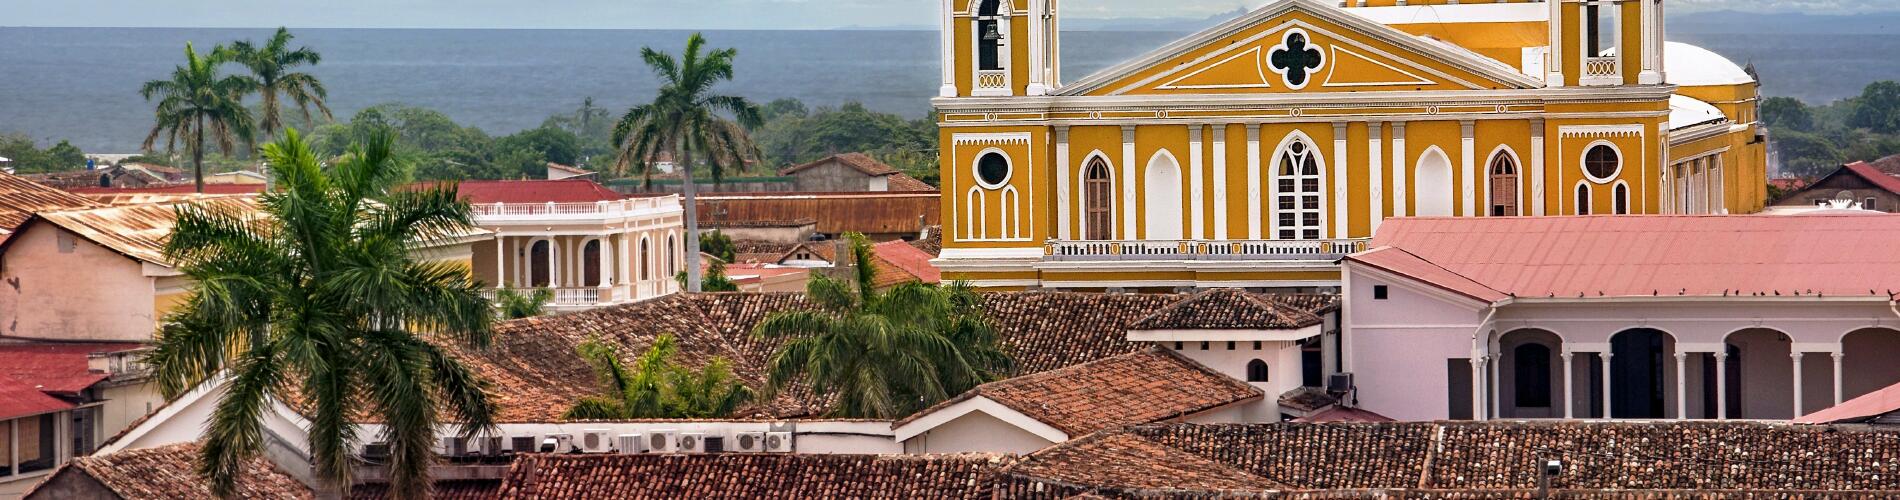 Никарагуа, Центральная Америка, Америка